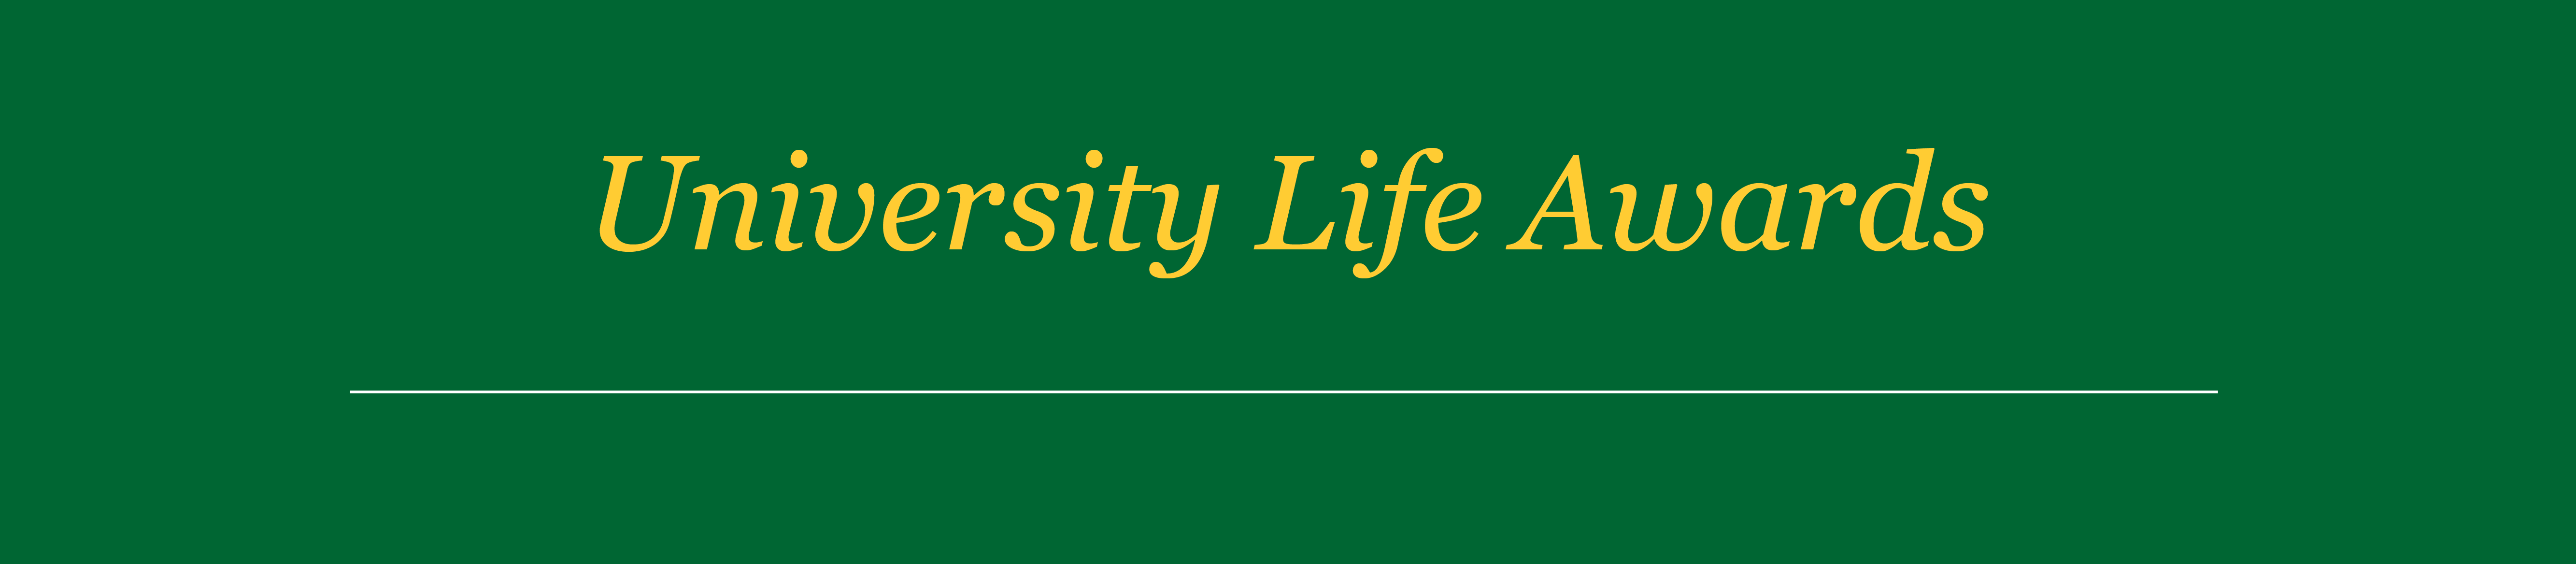 University Life Awards header